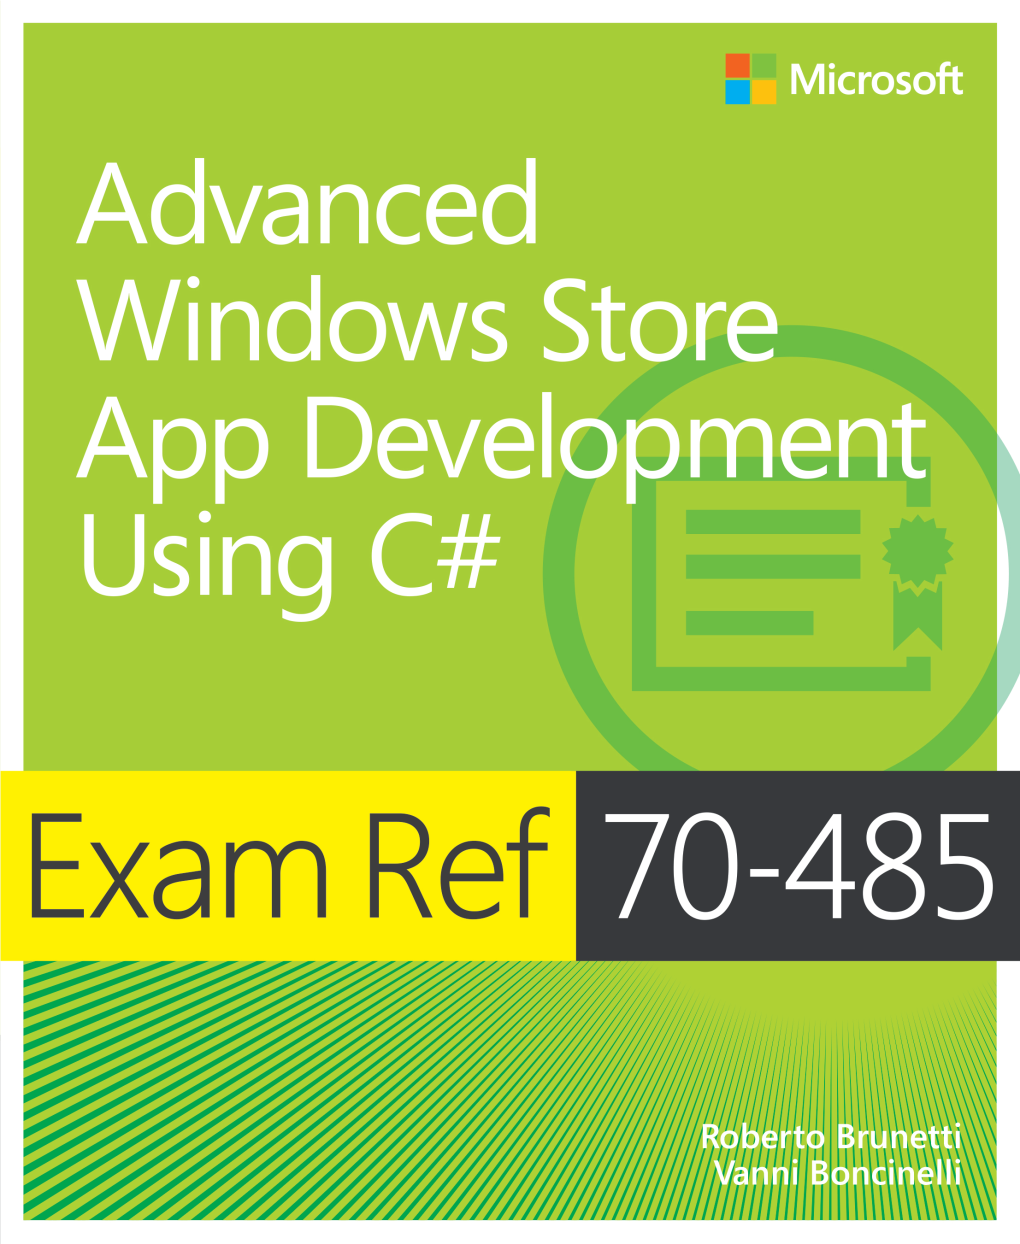 Exam Ref 70-485: Advanced Windows Store App Development Using C